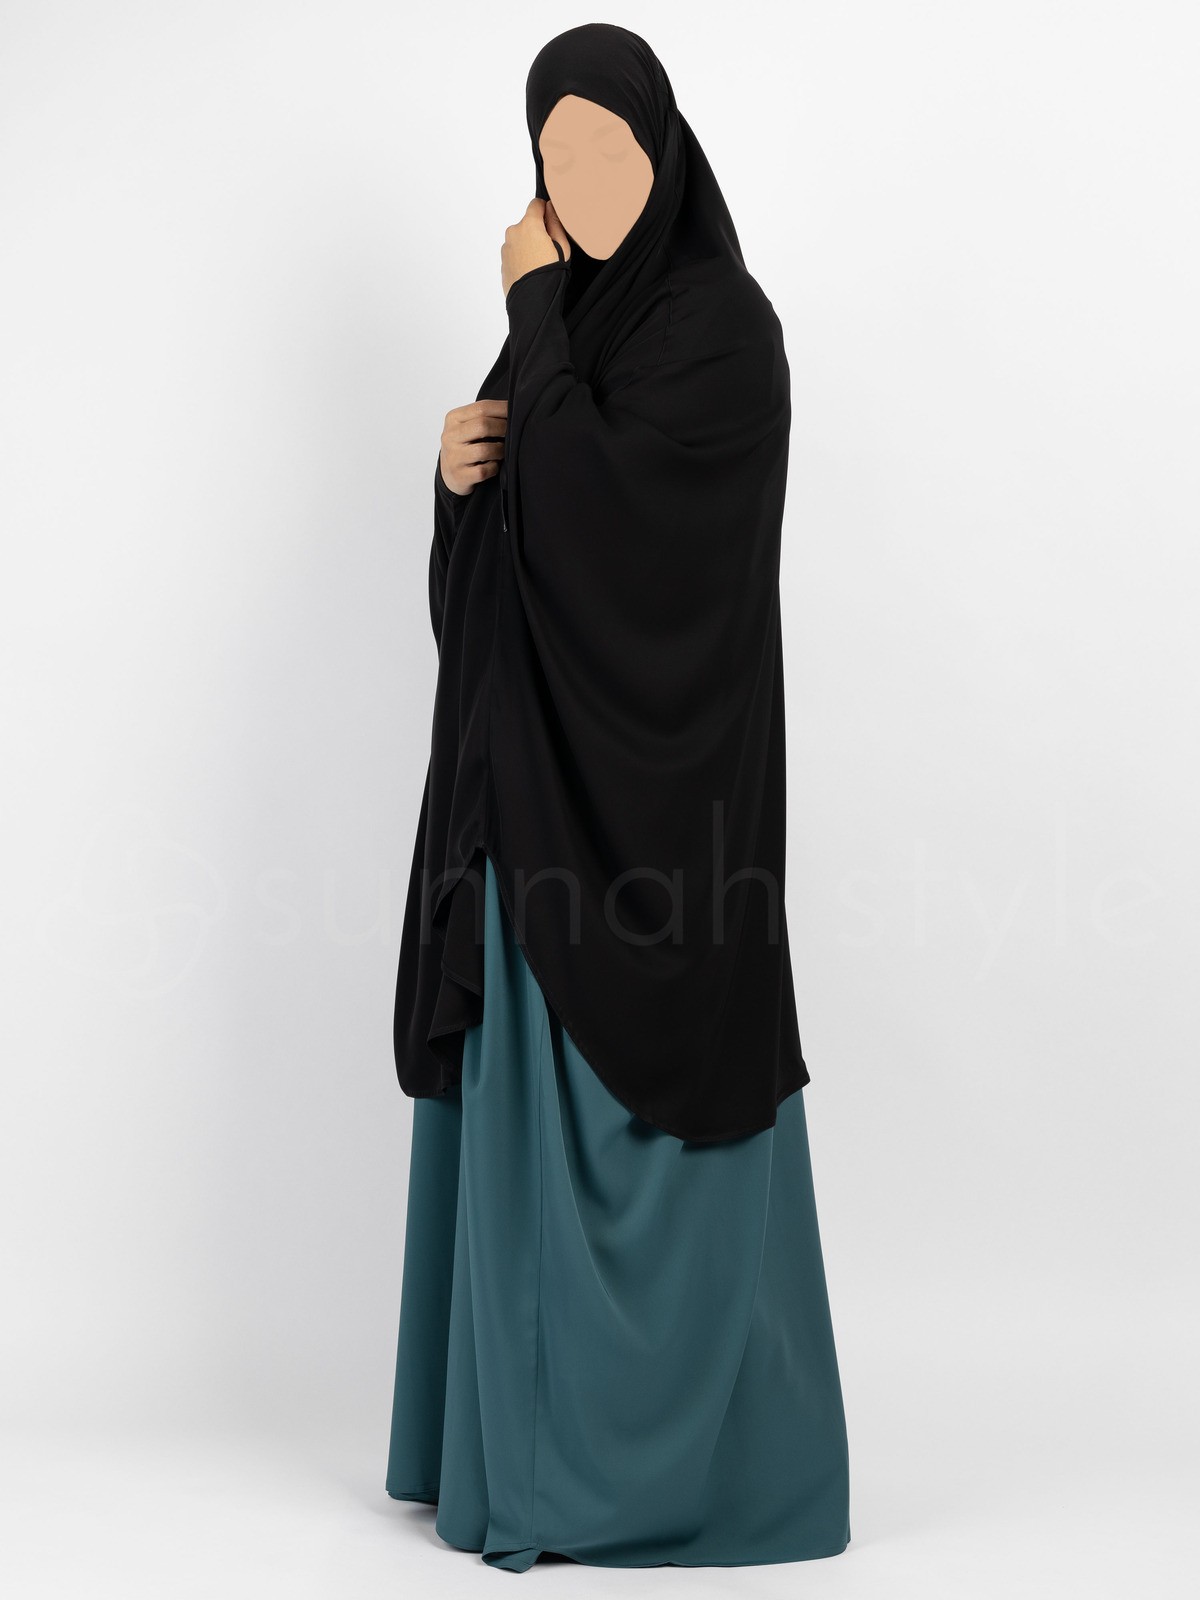 FACTORY SECONDS: Signature Jilbab Top - Knee Length (Black) - Medium